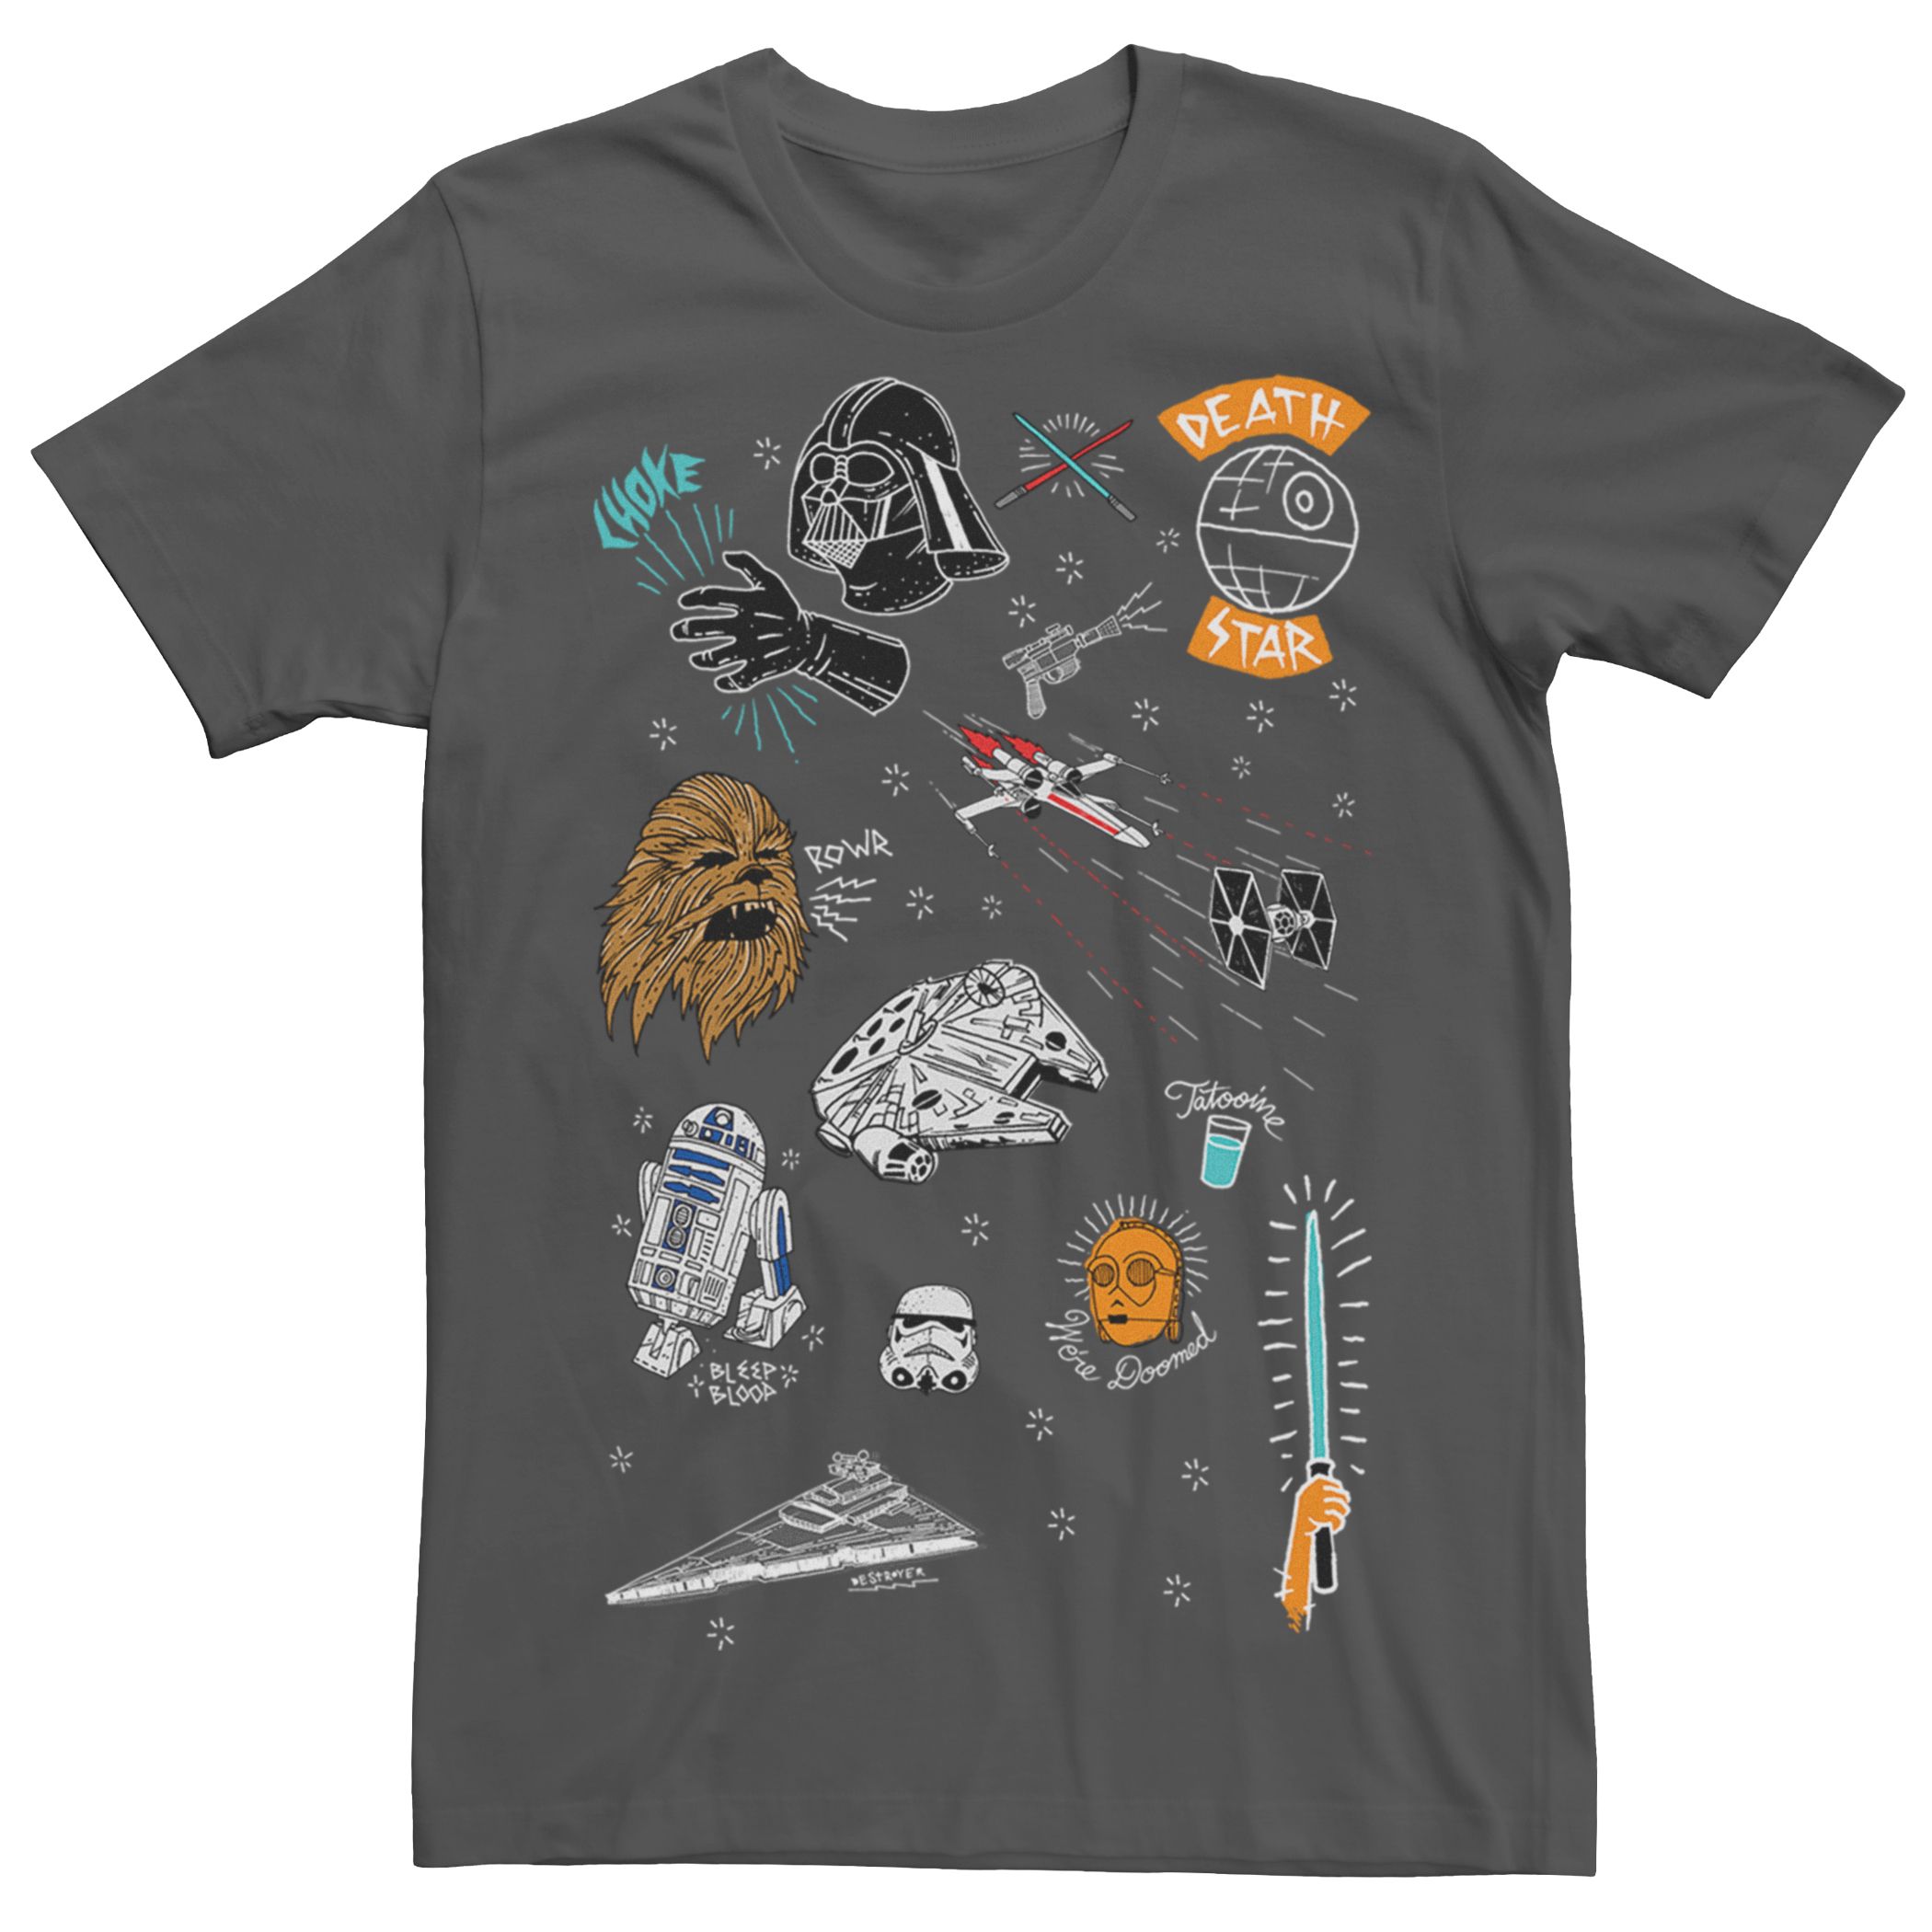 Мужская футболка с рисунками персонажей «Звездных войн» Licensed Character